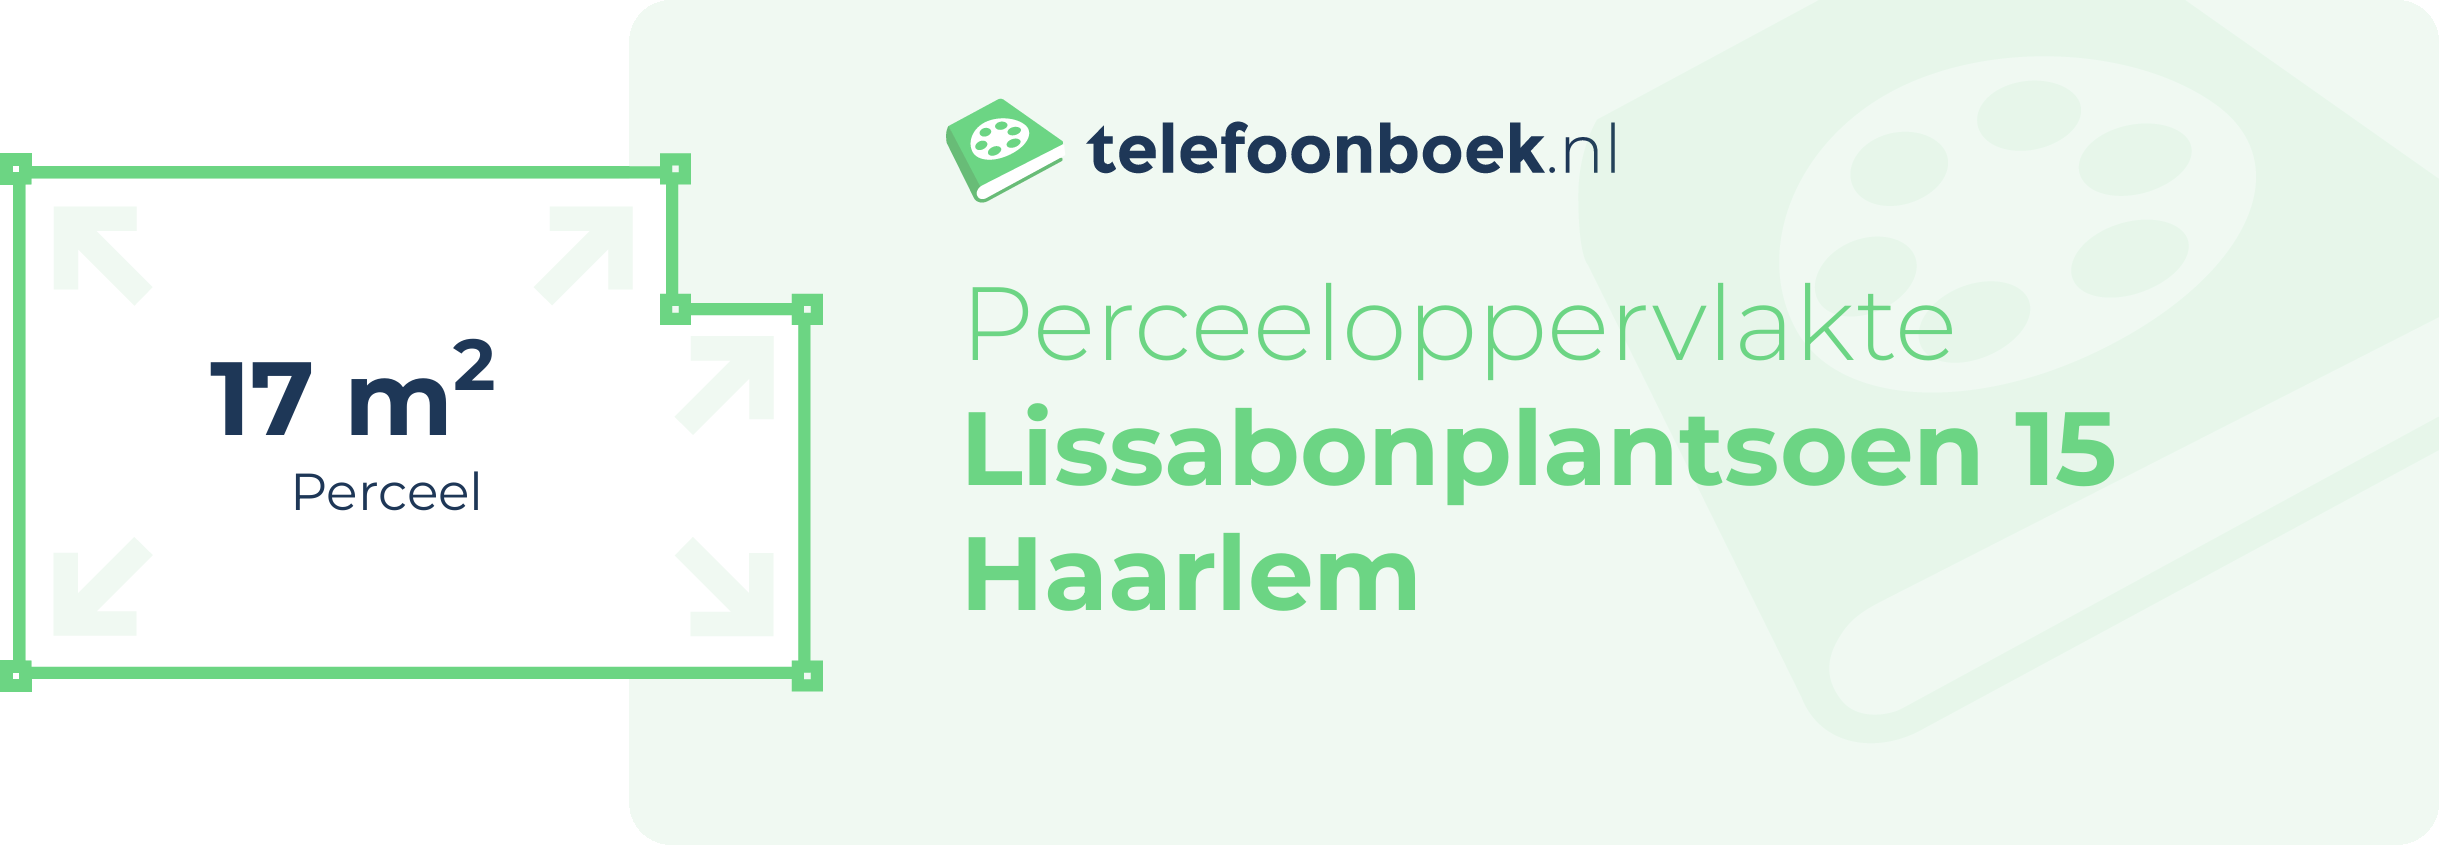 Perceeloppervlakte Lissabonplantsoen 15 Haarlem